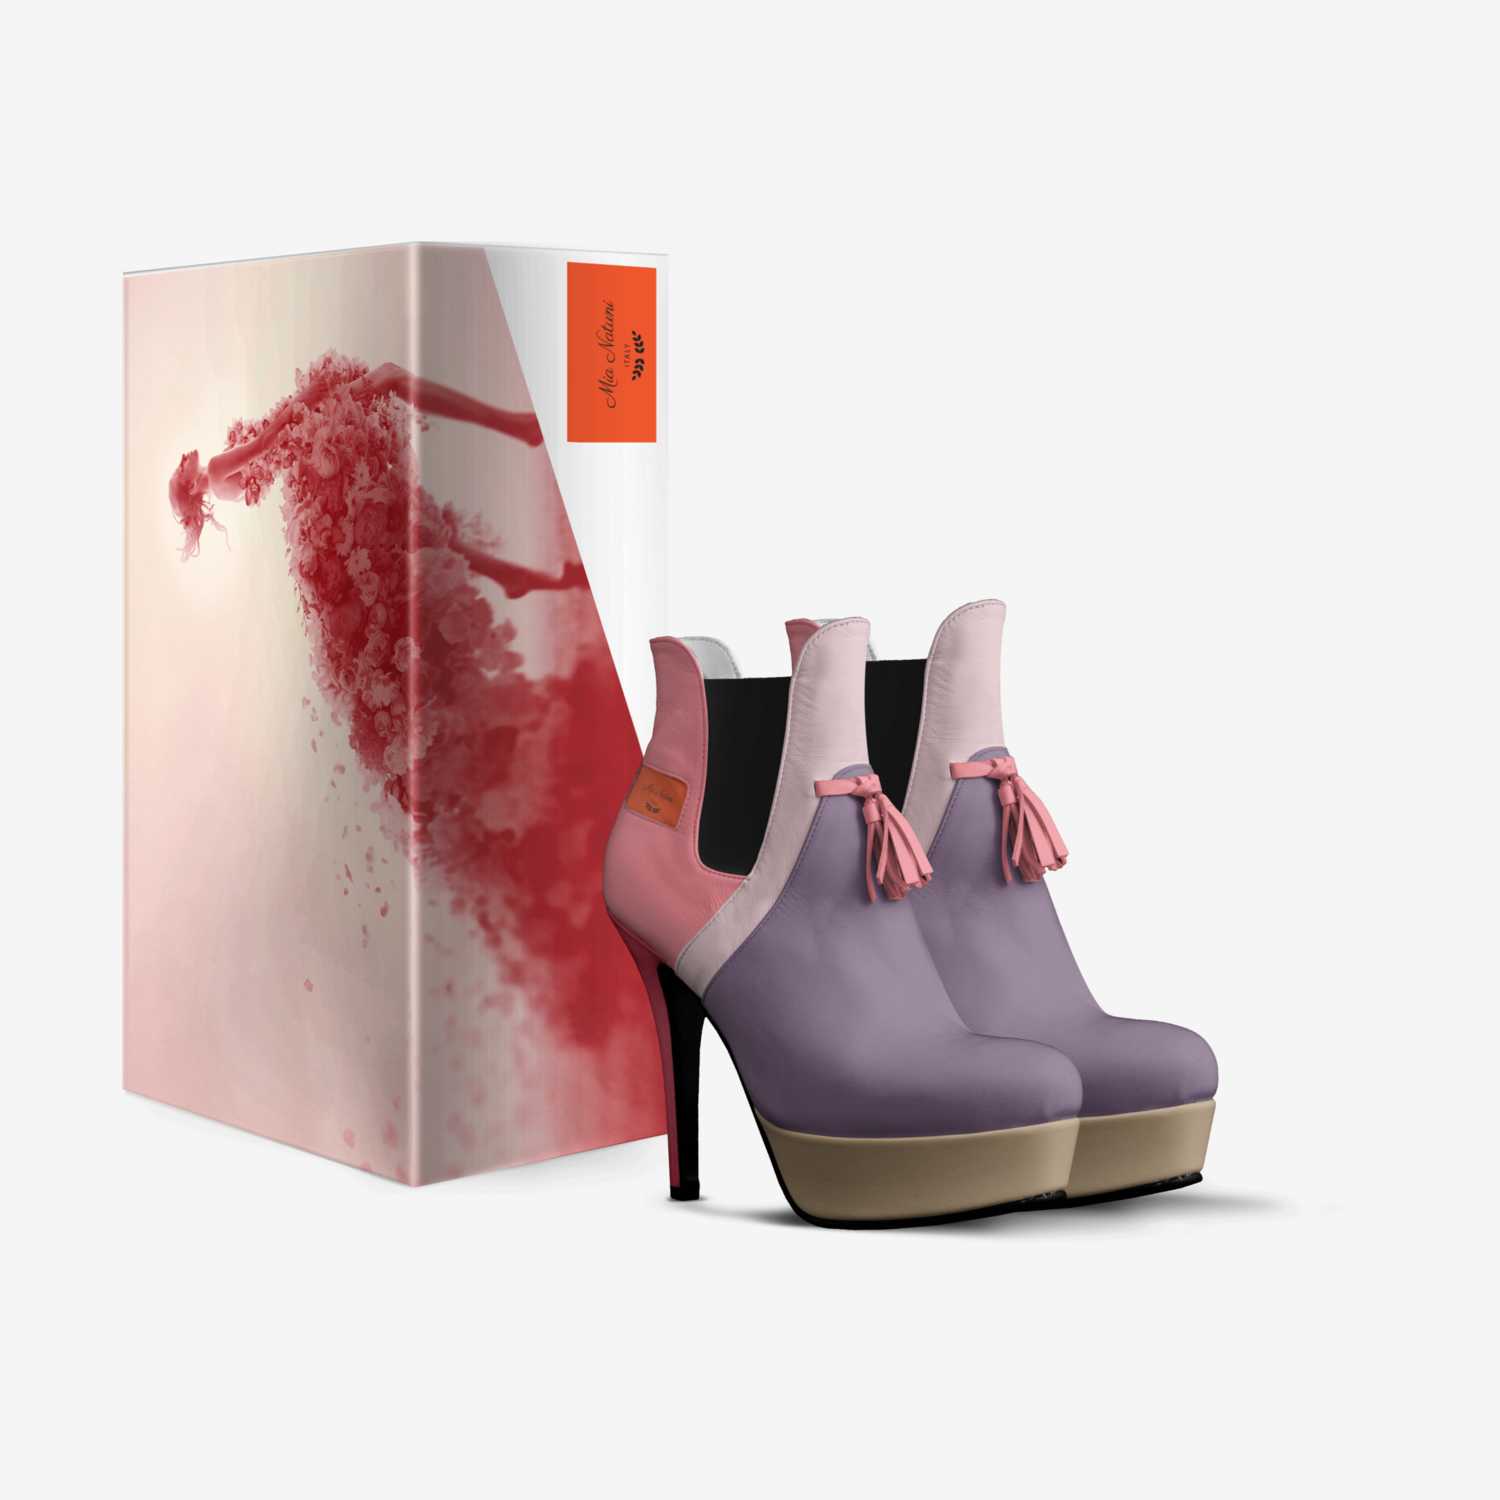 Yokozunah custom made in Italy shoes by John Koly | Box view